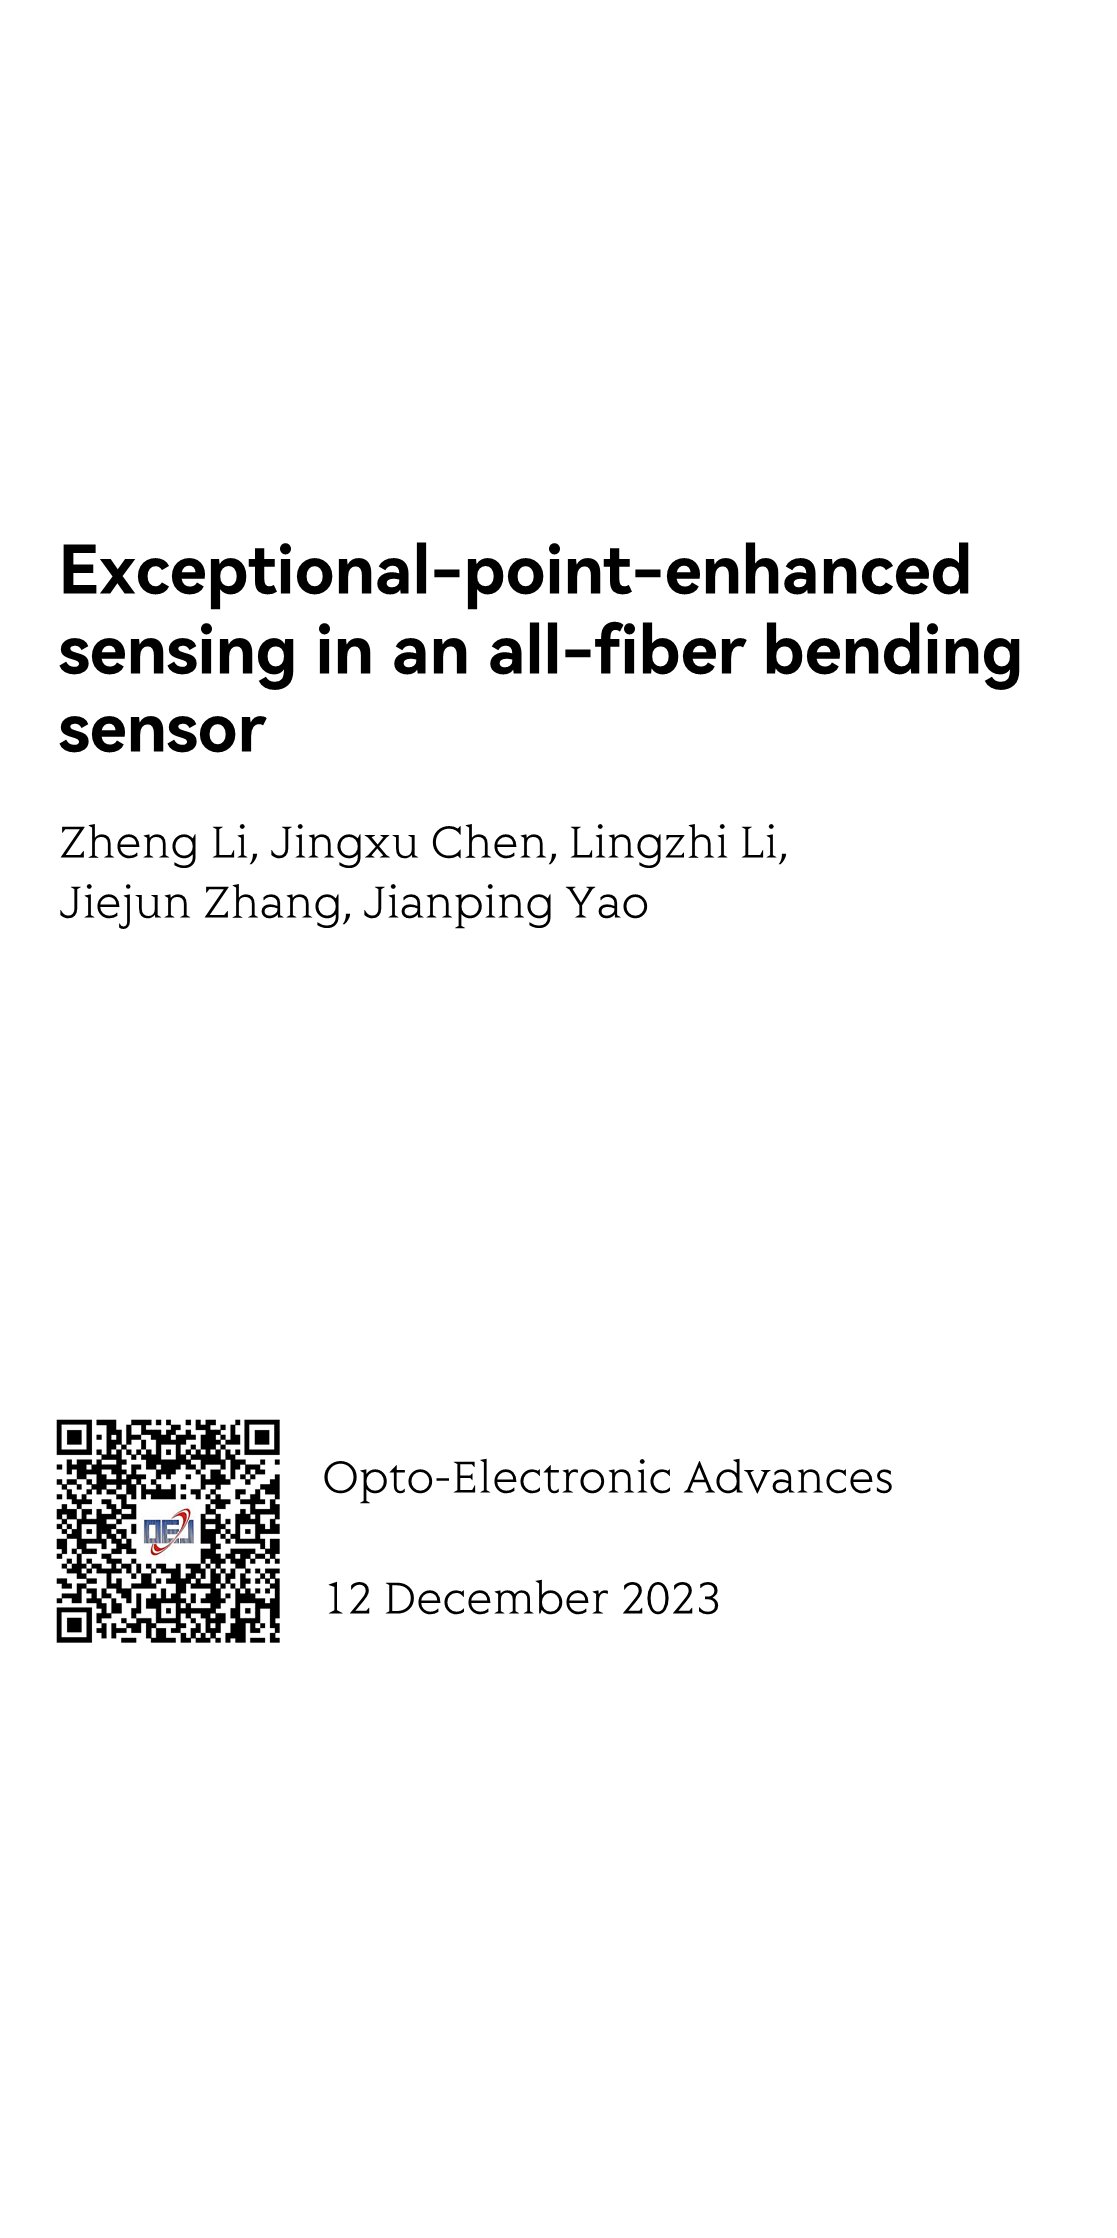 Exceptional-point-enhanced sensing in an all-fiber bending sensor_1